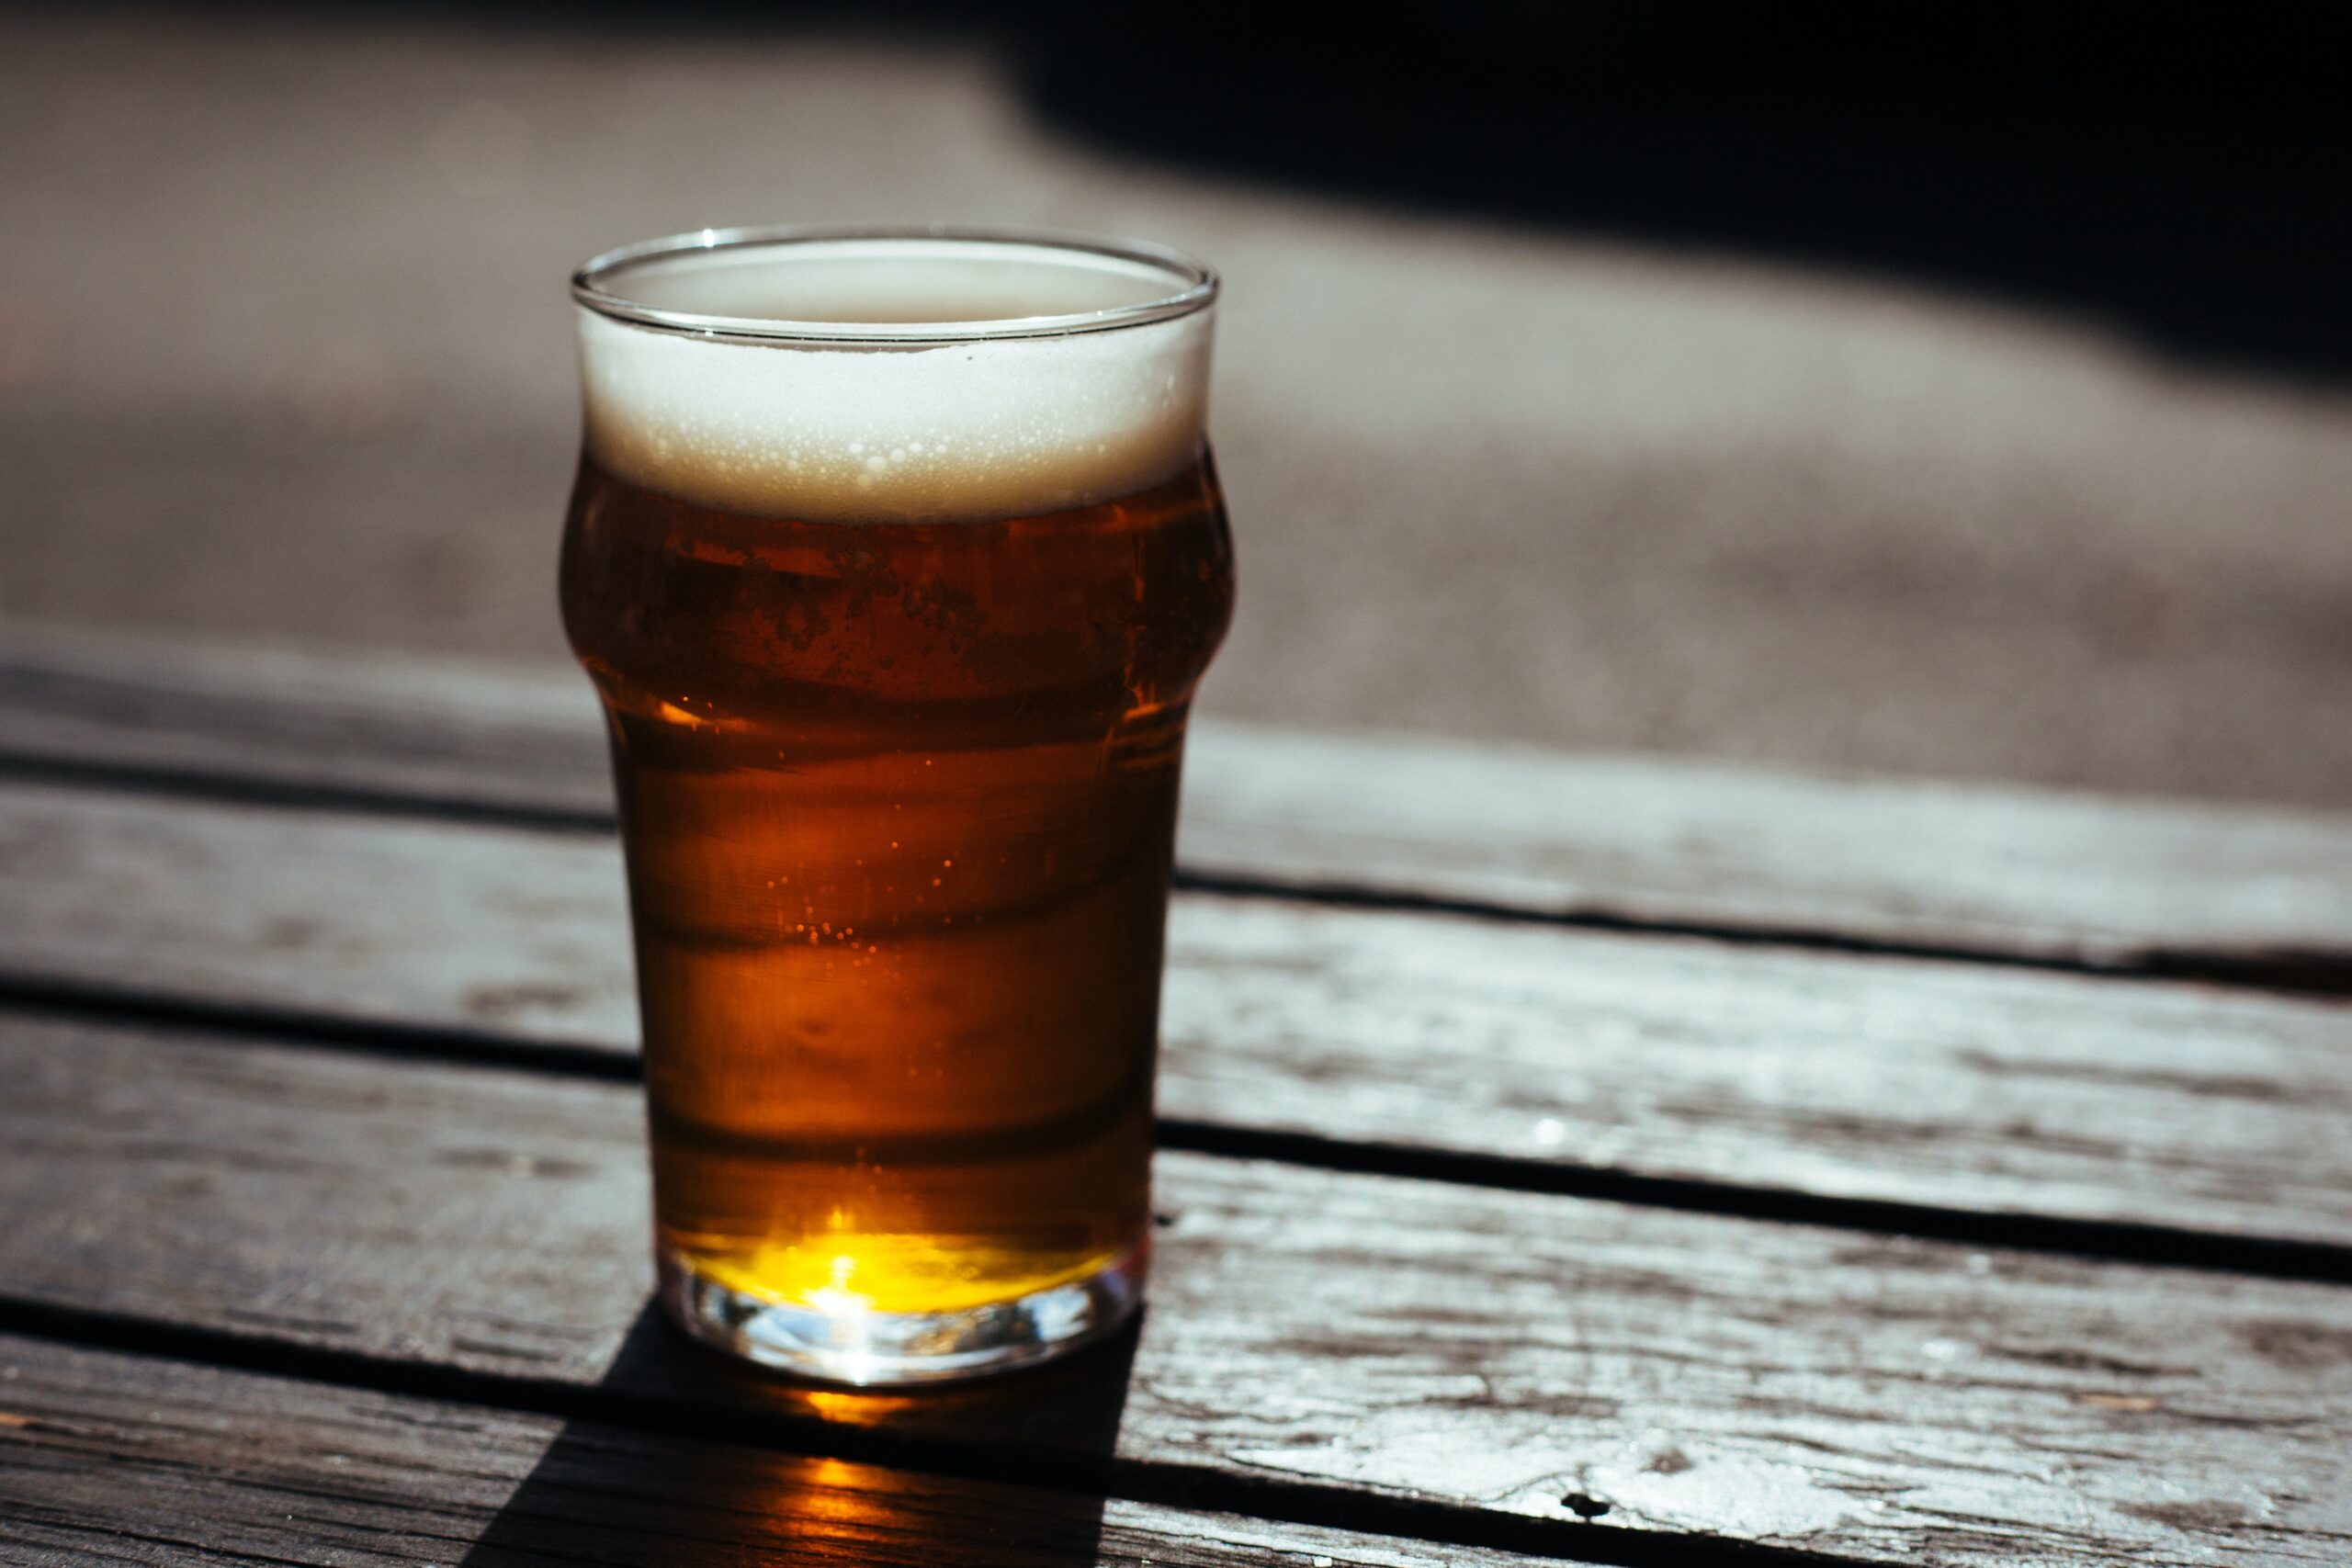 Cheers to great barley science on International Beer Day